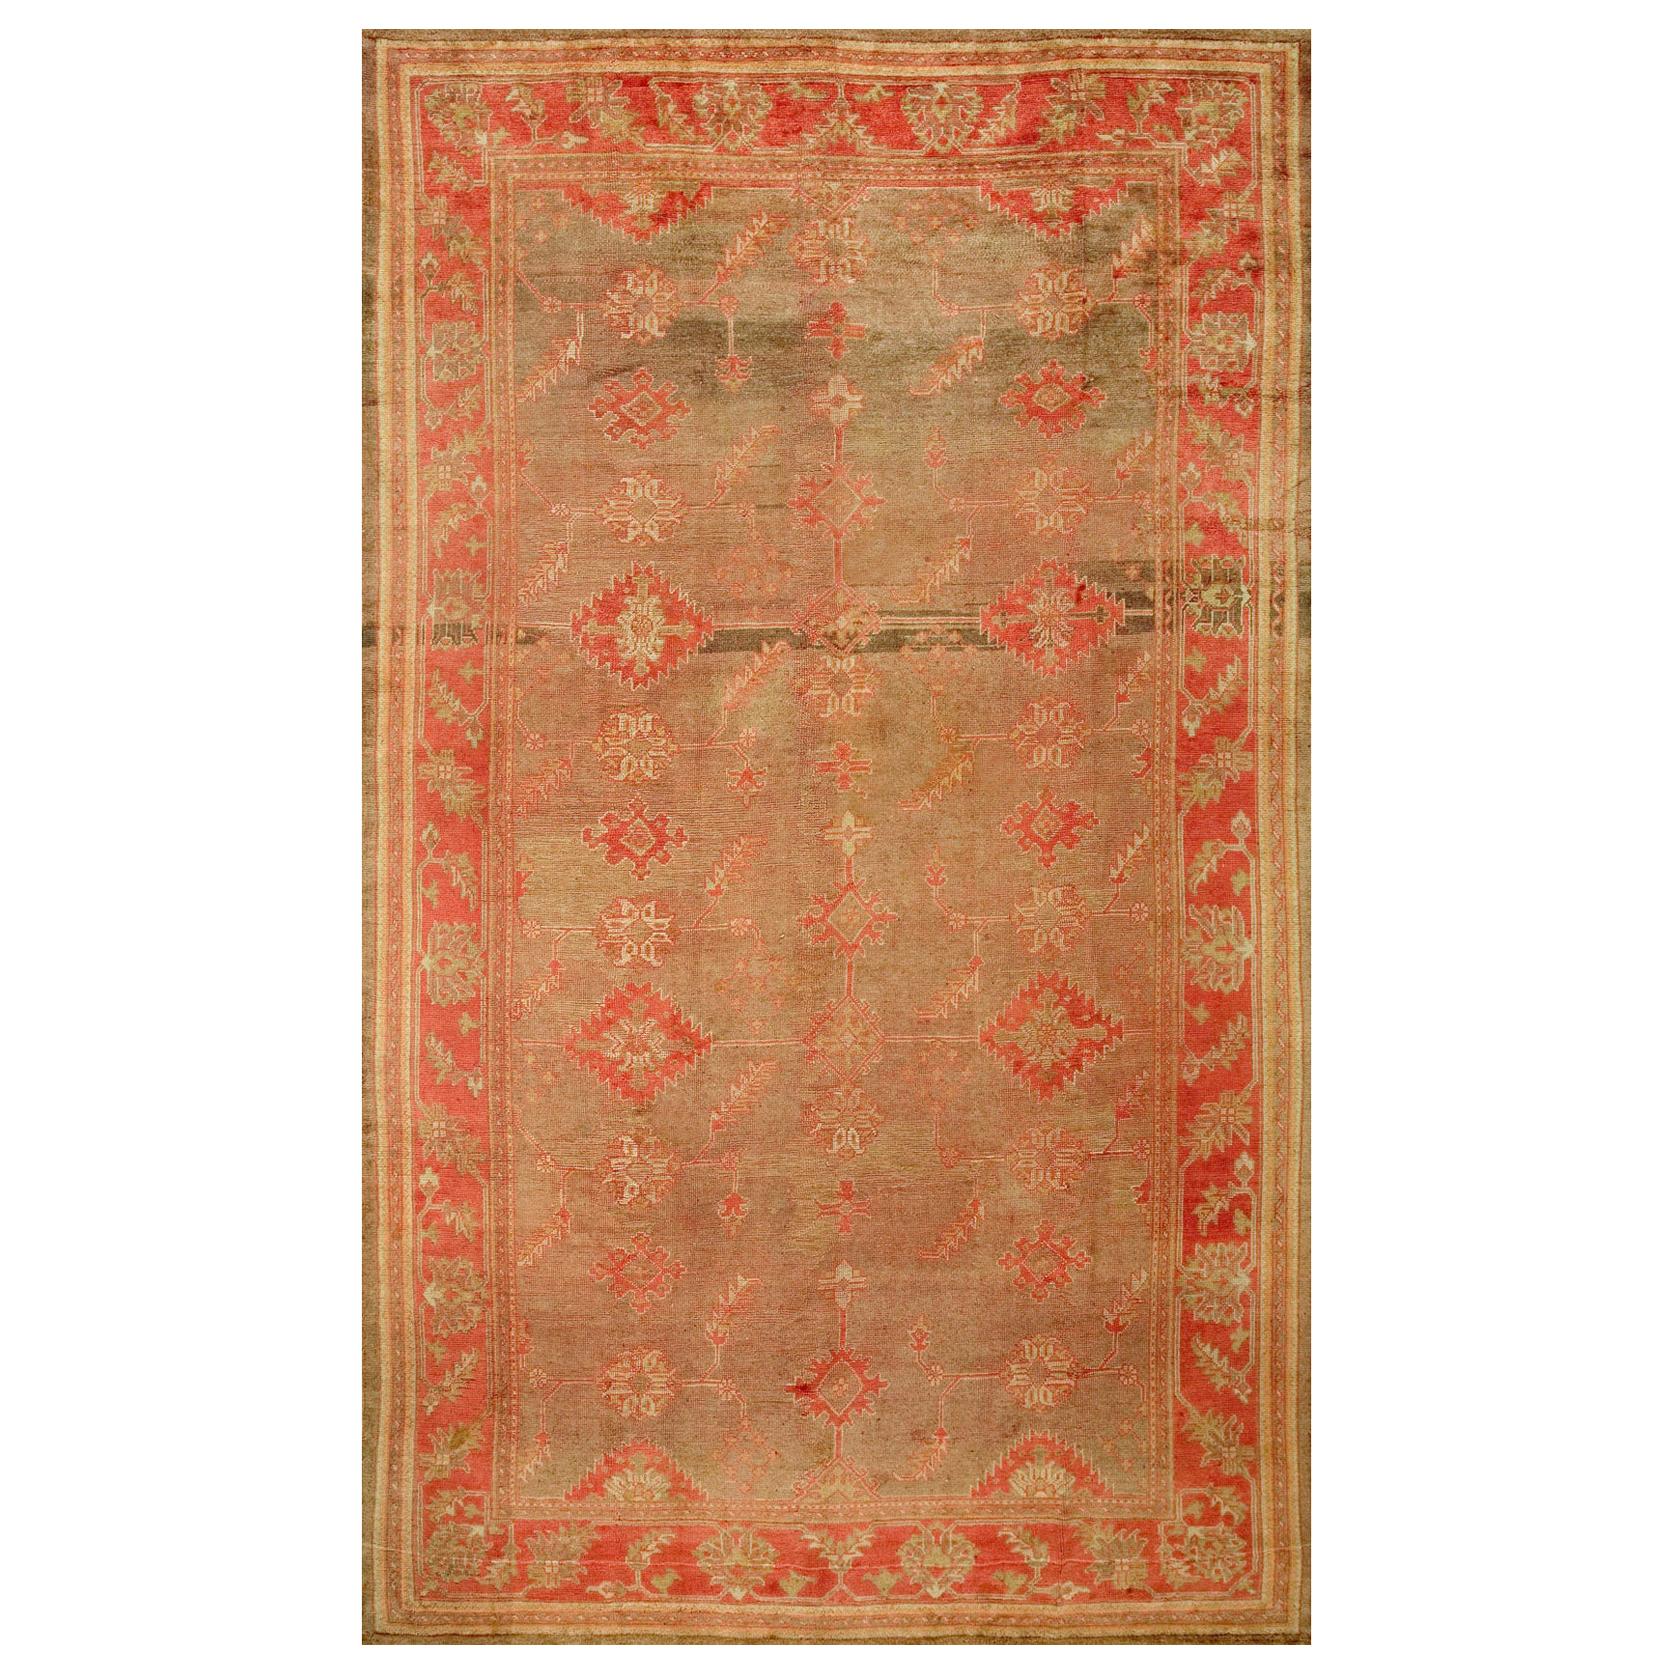 Early 20th Century Turkish Oushak Carpet  ( 9'6" x 16'6" - 290 x 503 )